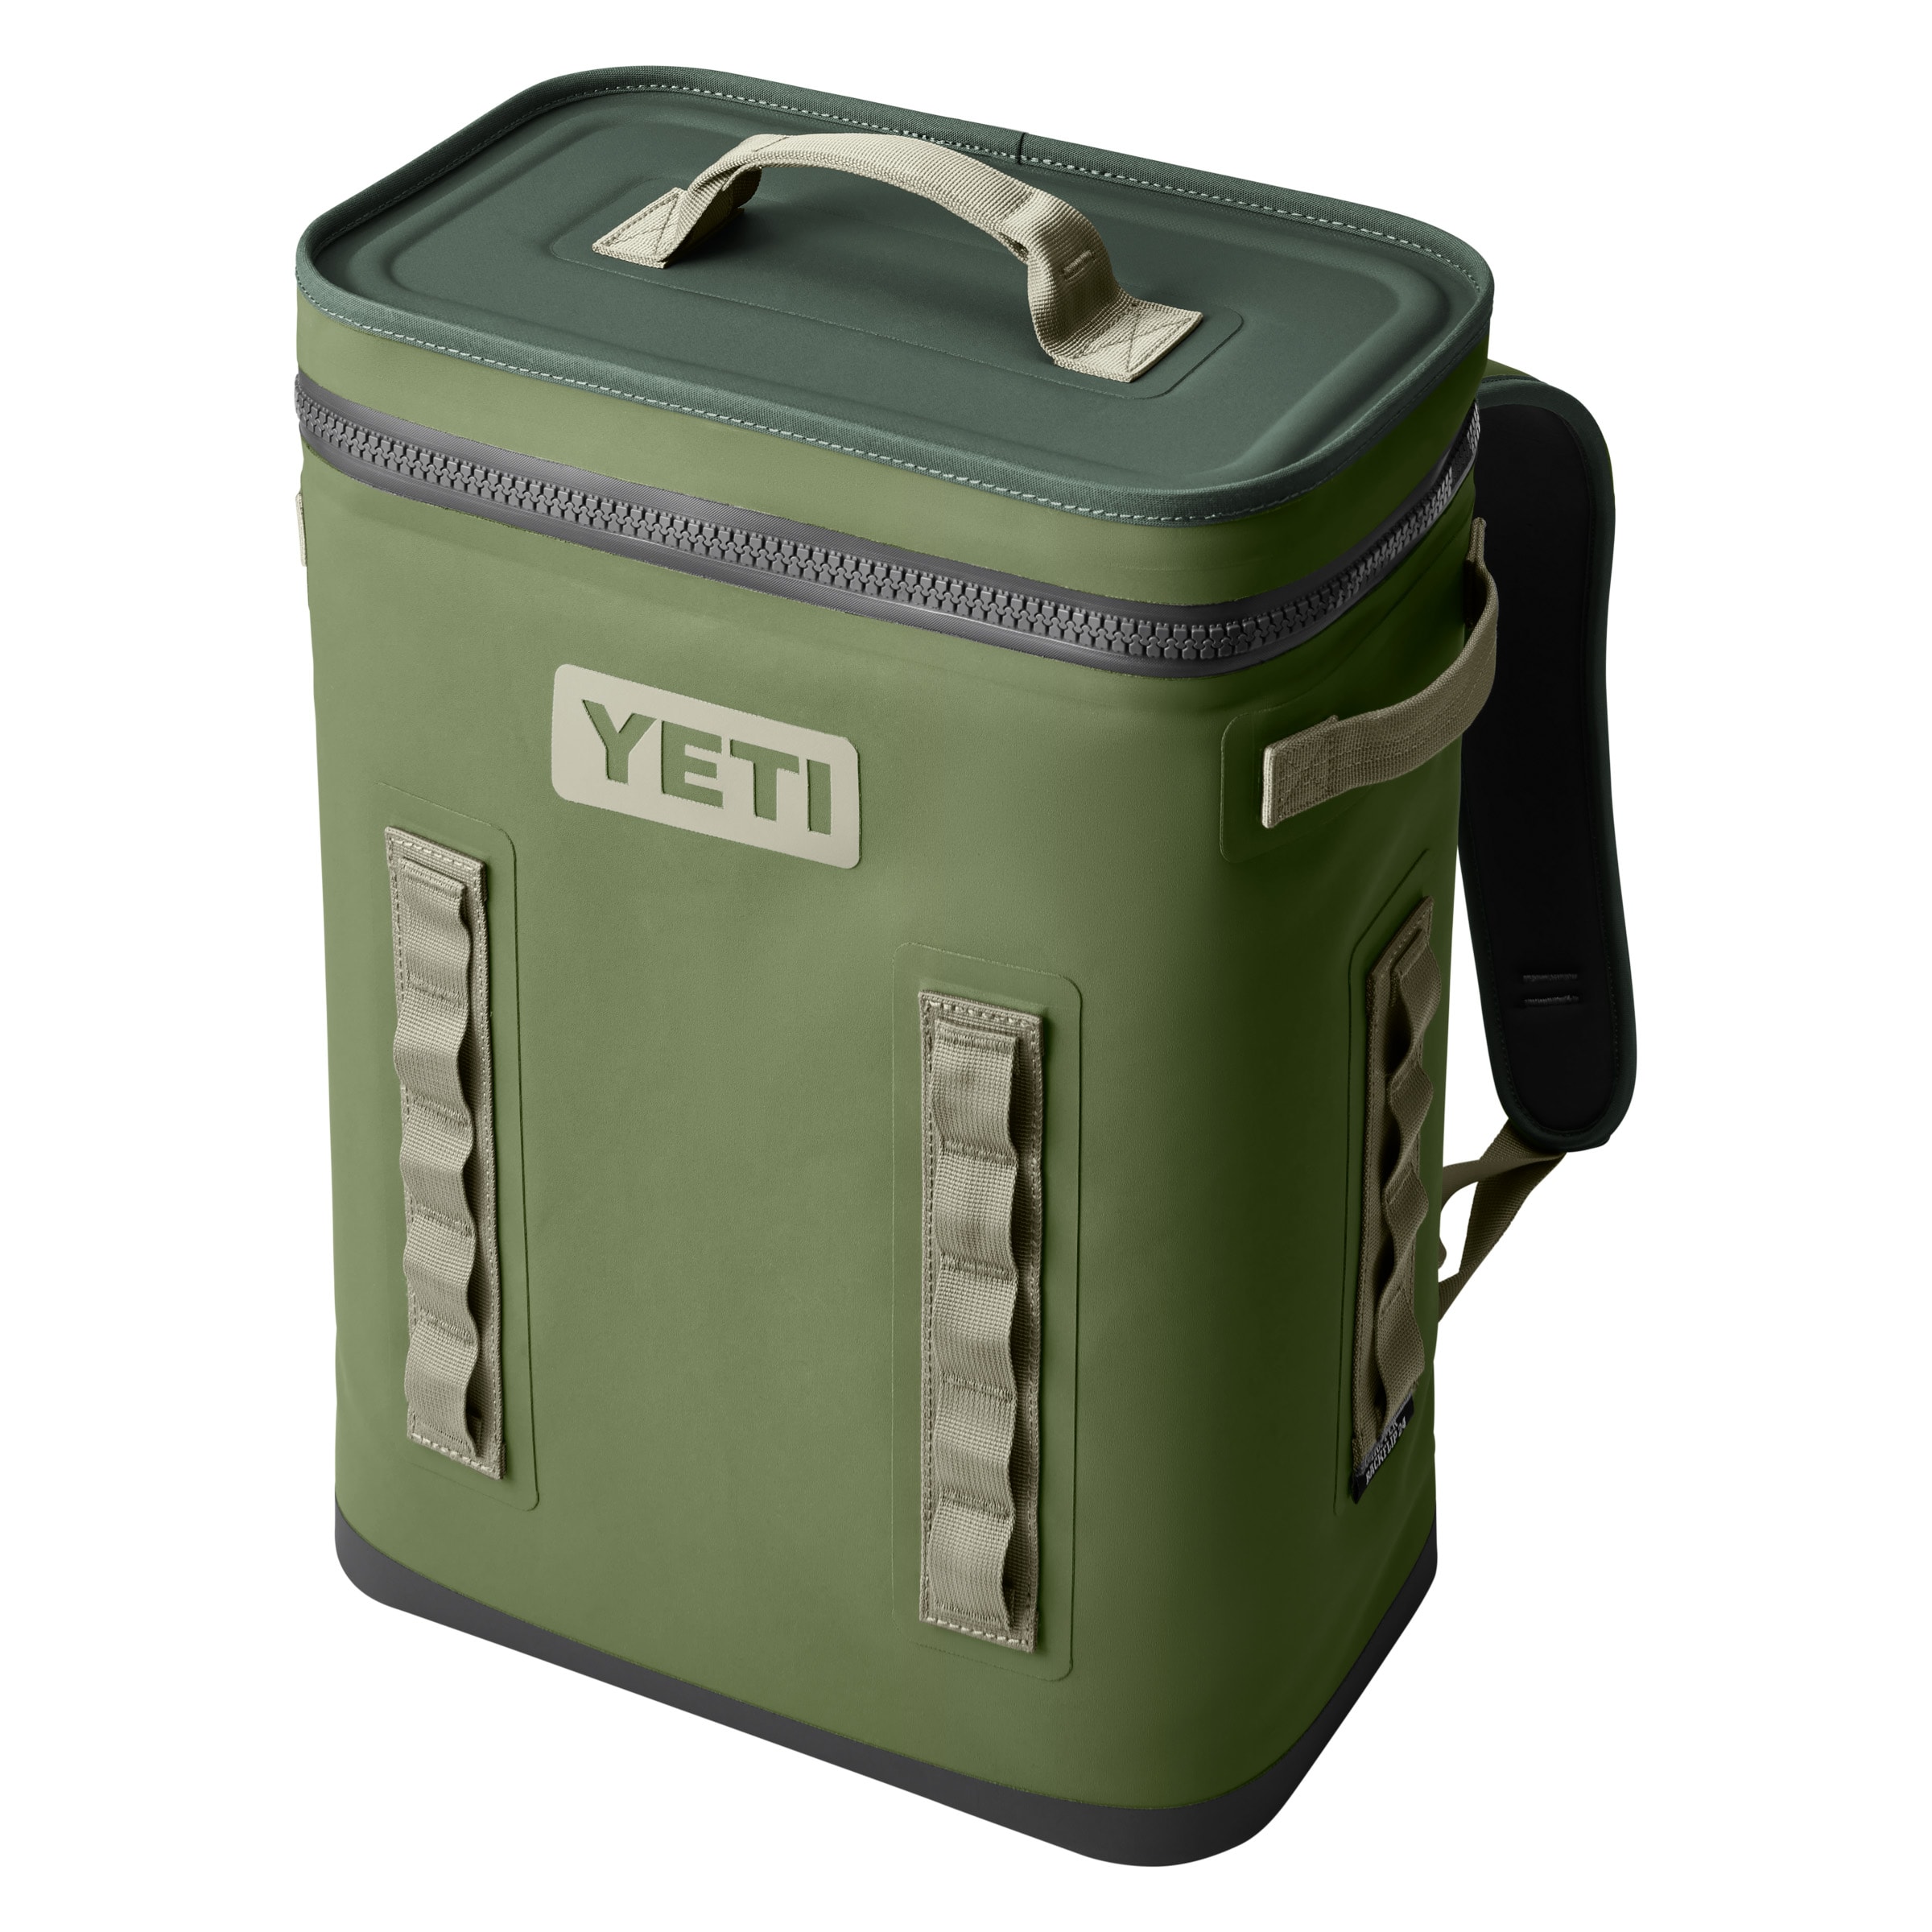 YETI Hopper Backflip 24 Insulated Backpack Cooler, Sagebrush Green at